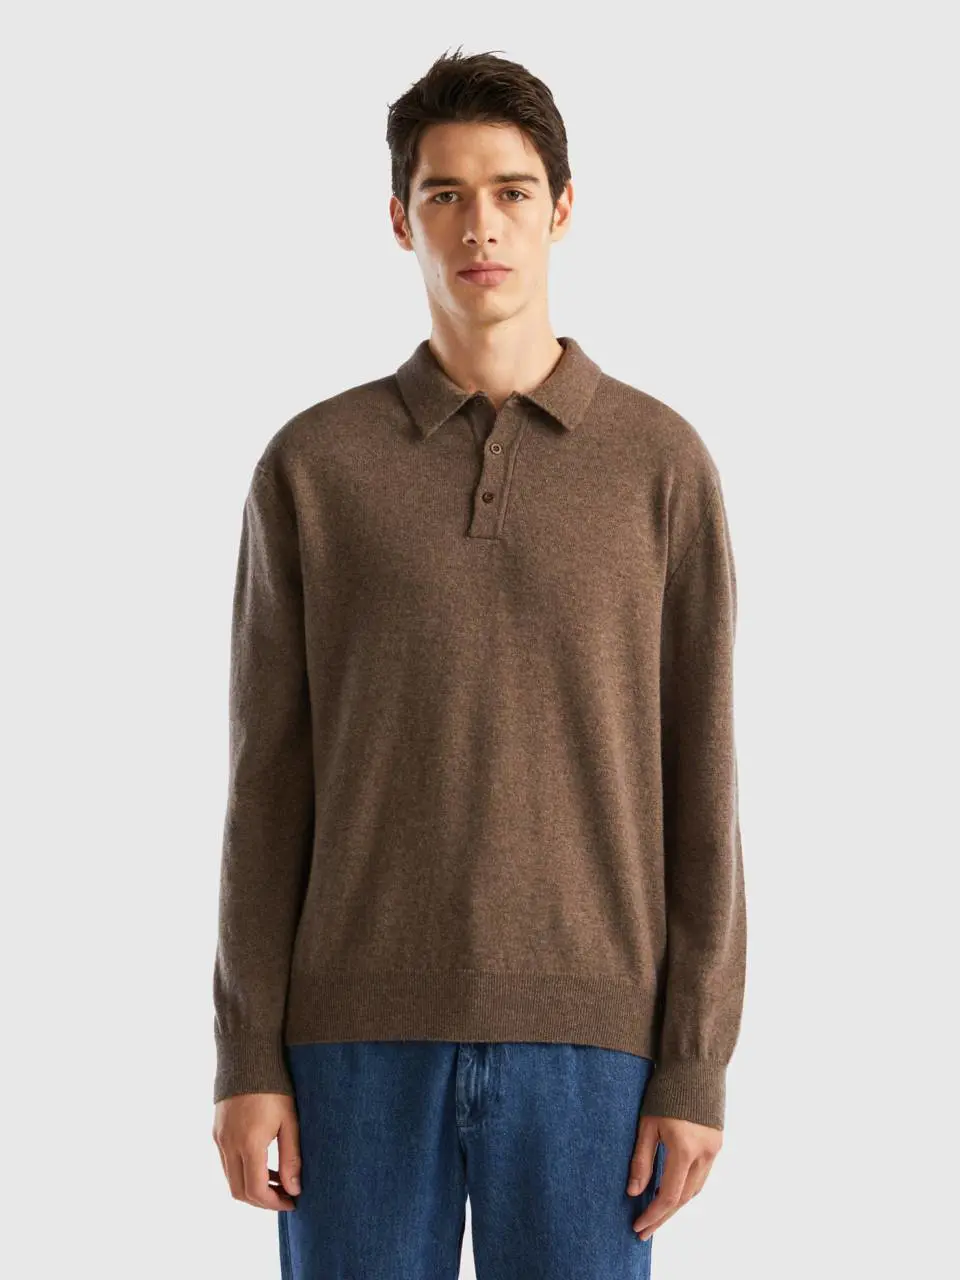 Benetton brown polo shirt in pure merino wool. 1